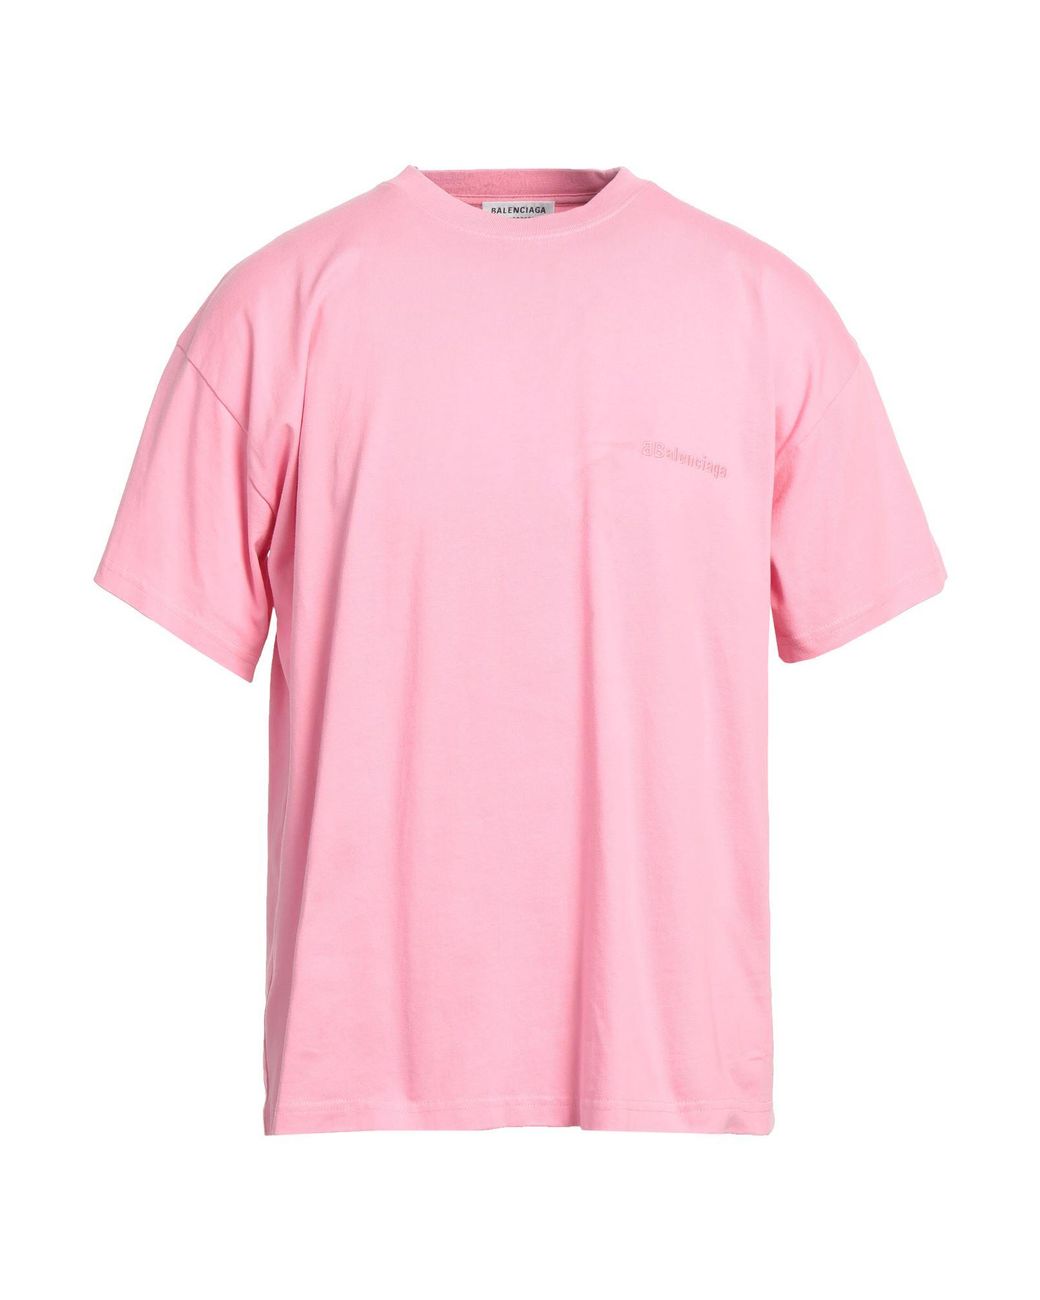 Womens Balenciaga Back Tshirt Medium Fit in Fluo Pink  Balenciaga NL